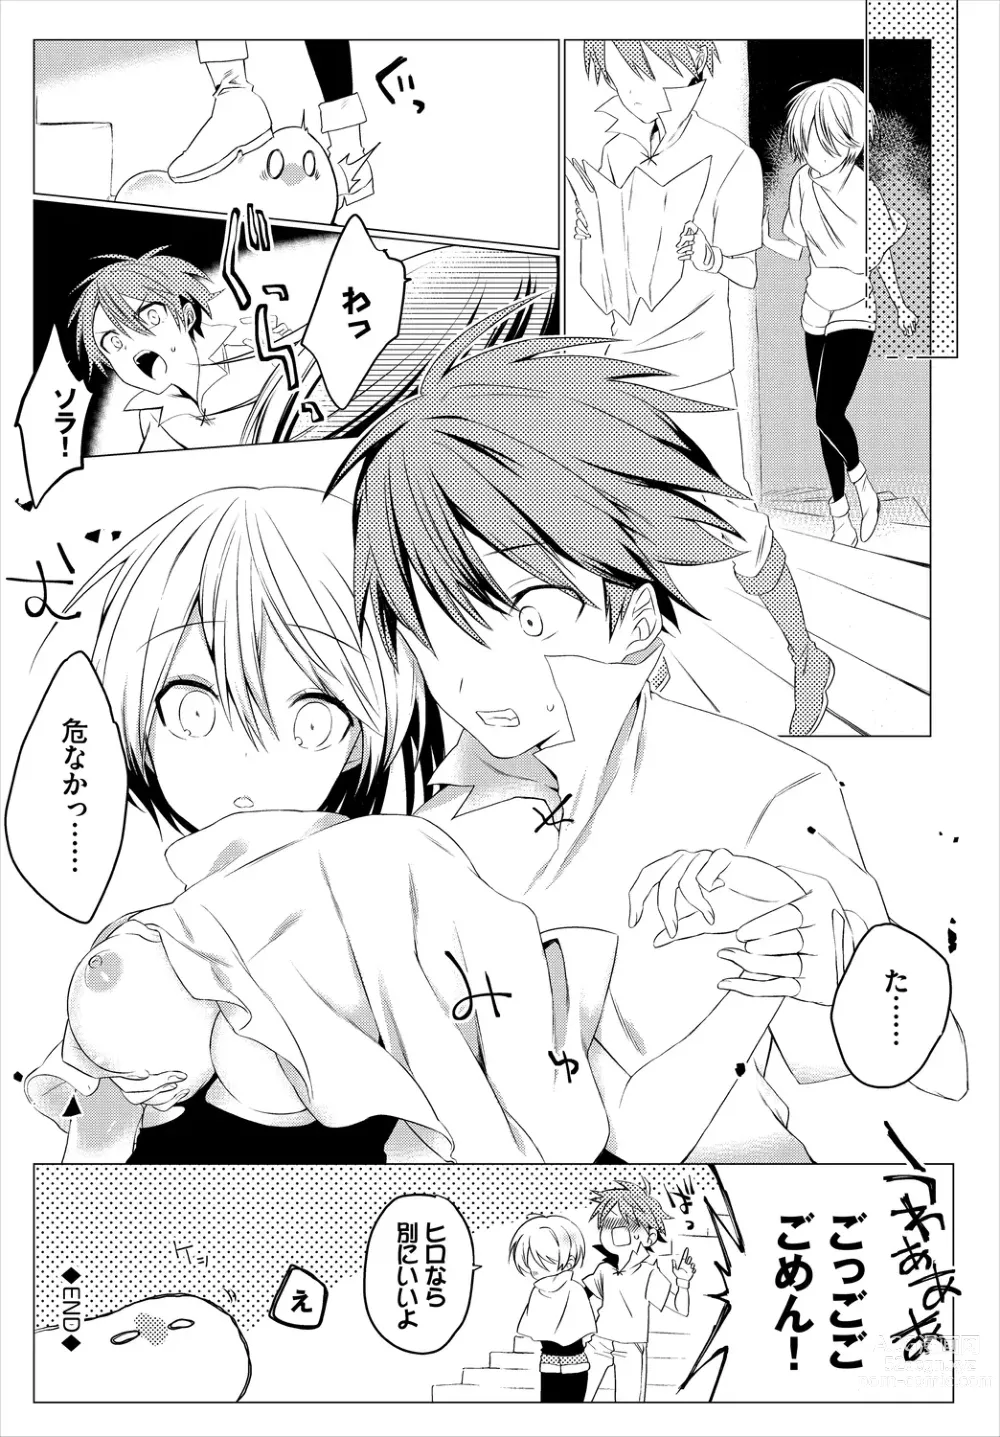 Page 182 of manga Koi-in Rhapsody